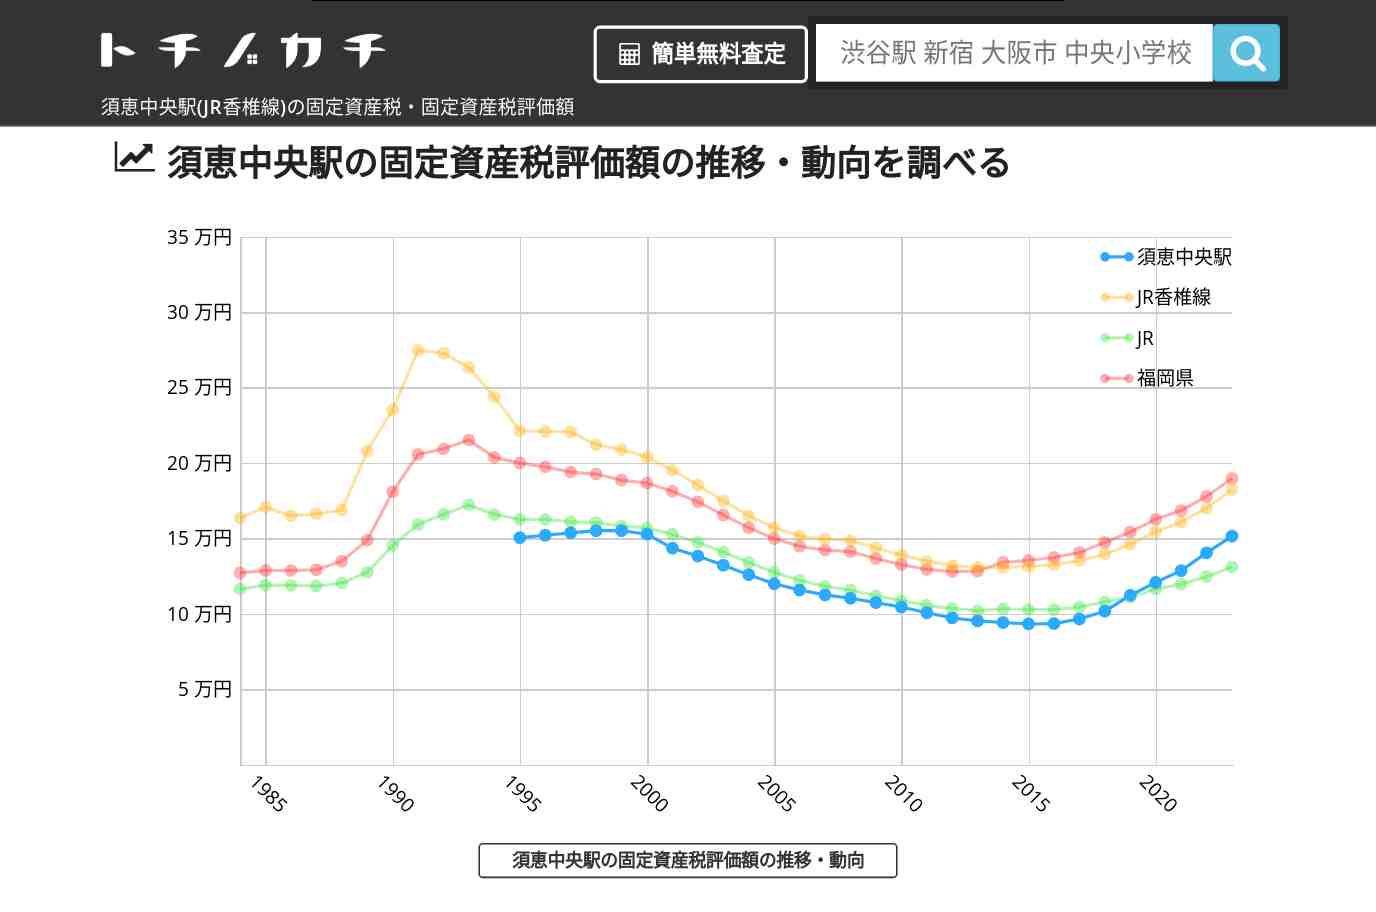 須恵中央駅(JR香椎線)の固定資産税・固定資産税評価額 | トチノカチ